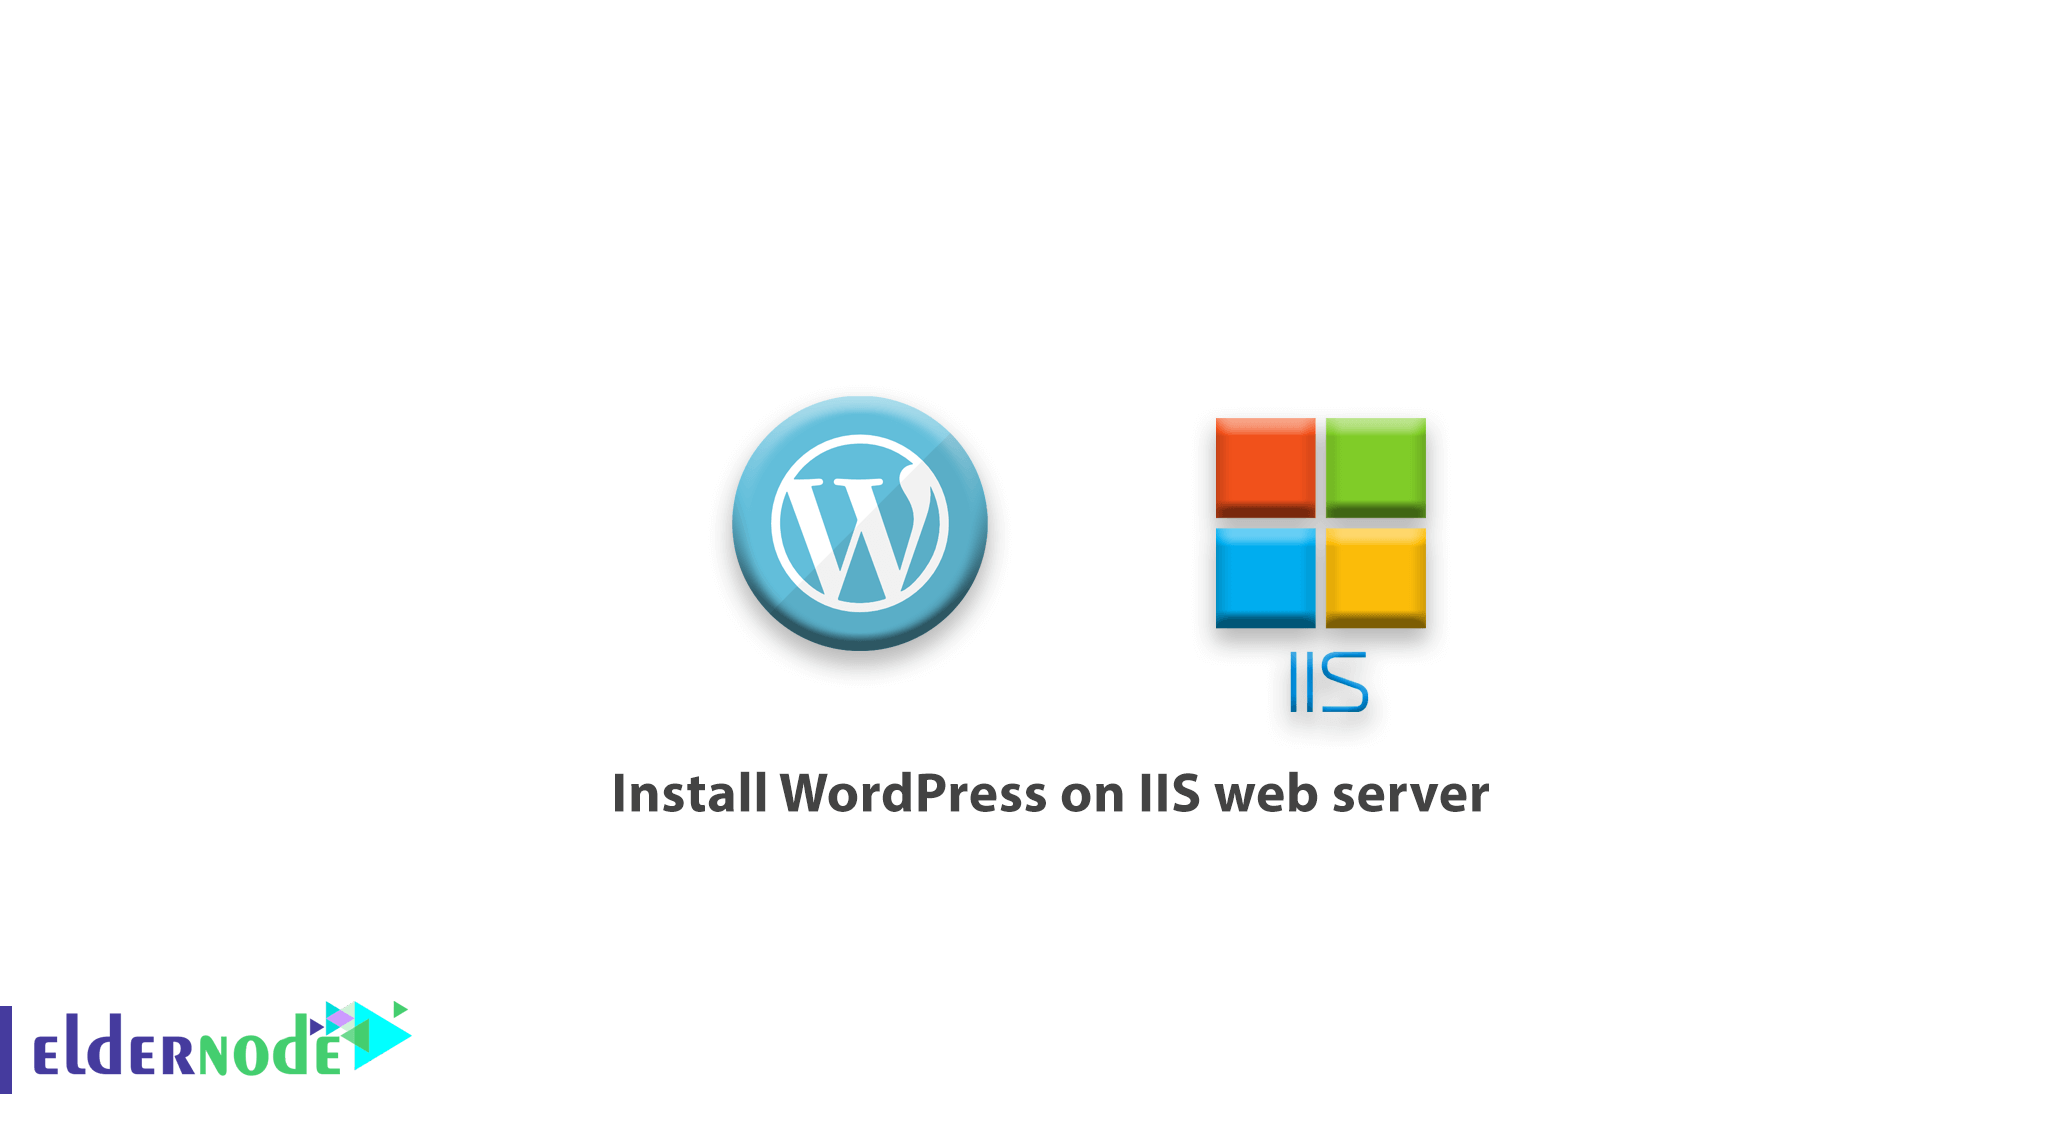 How to install WordPress on IIS web server